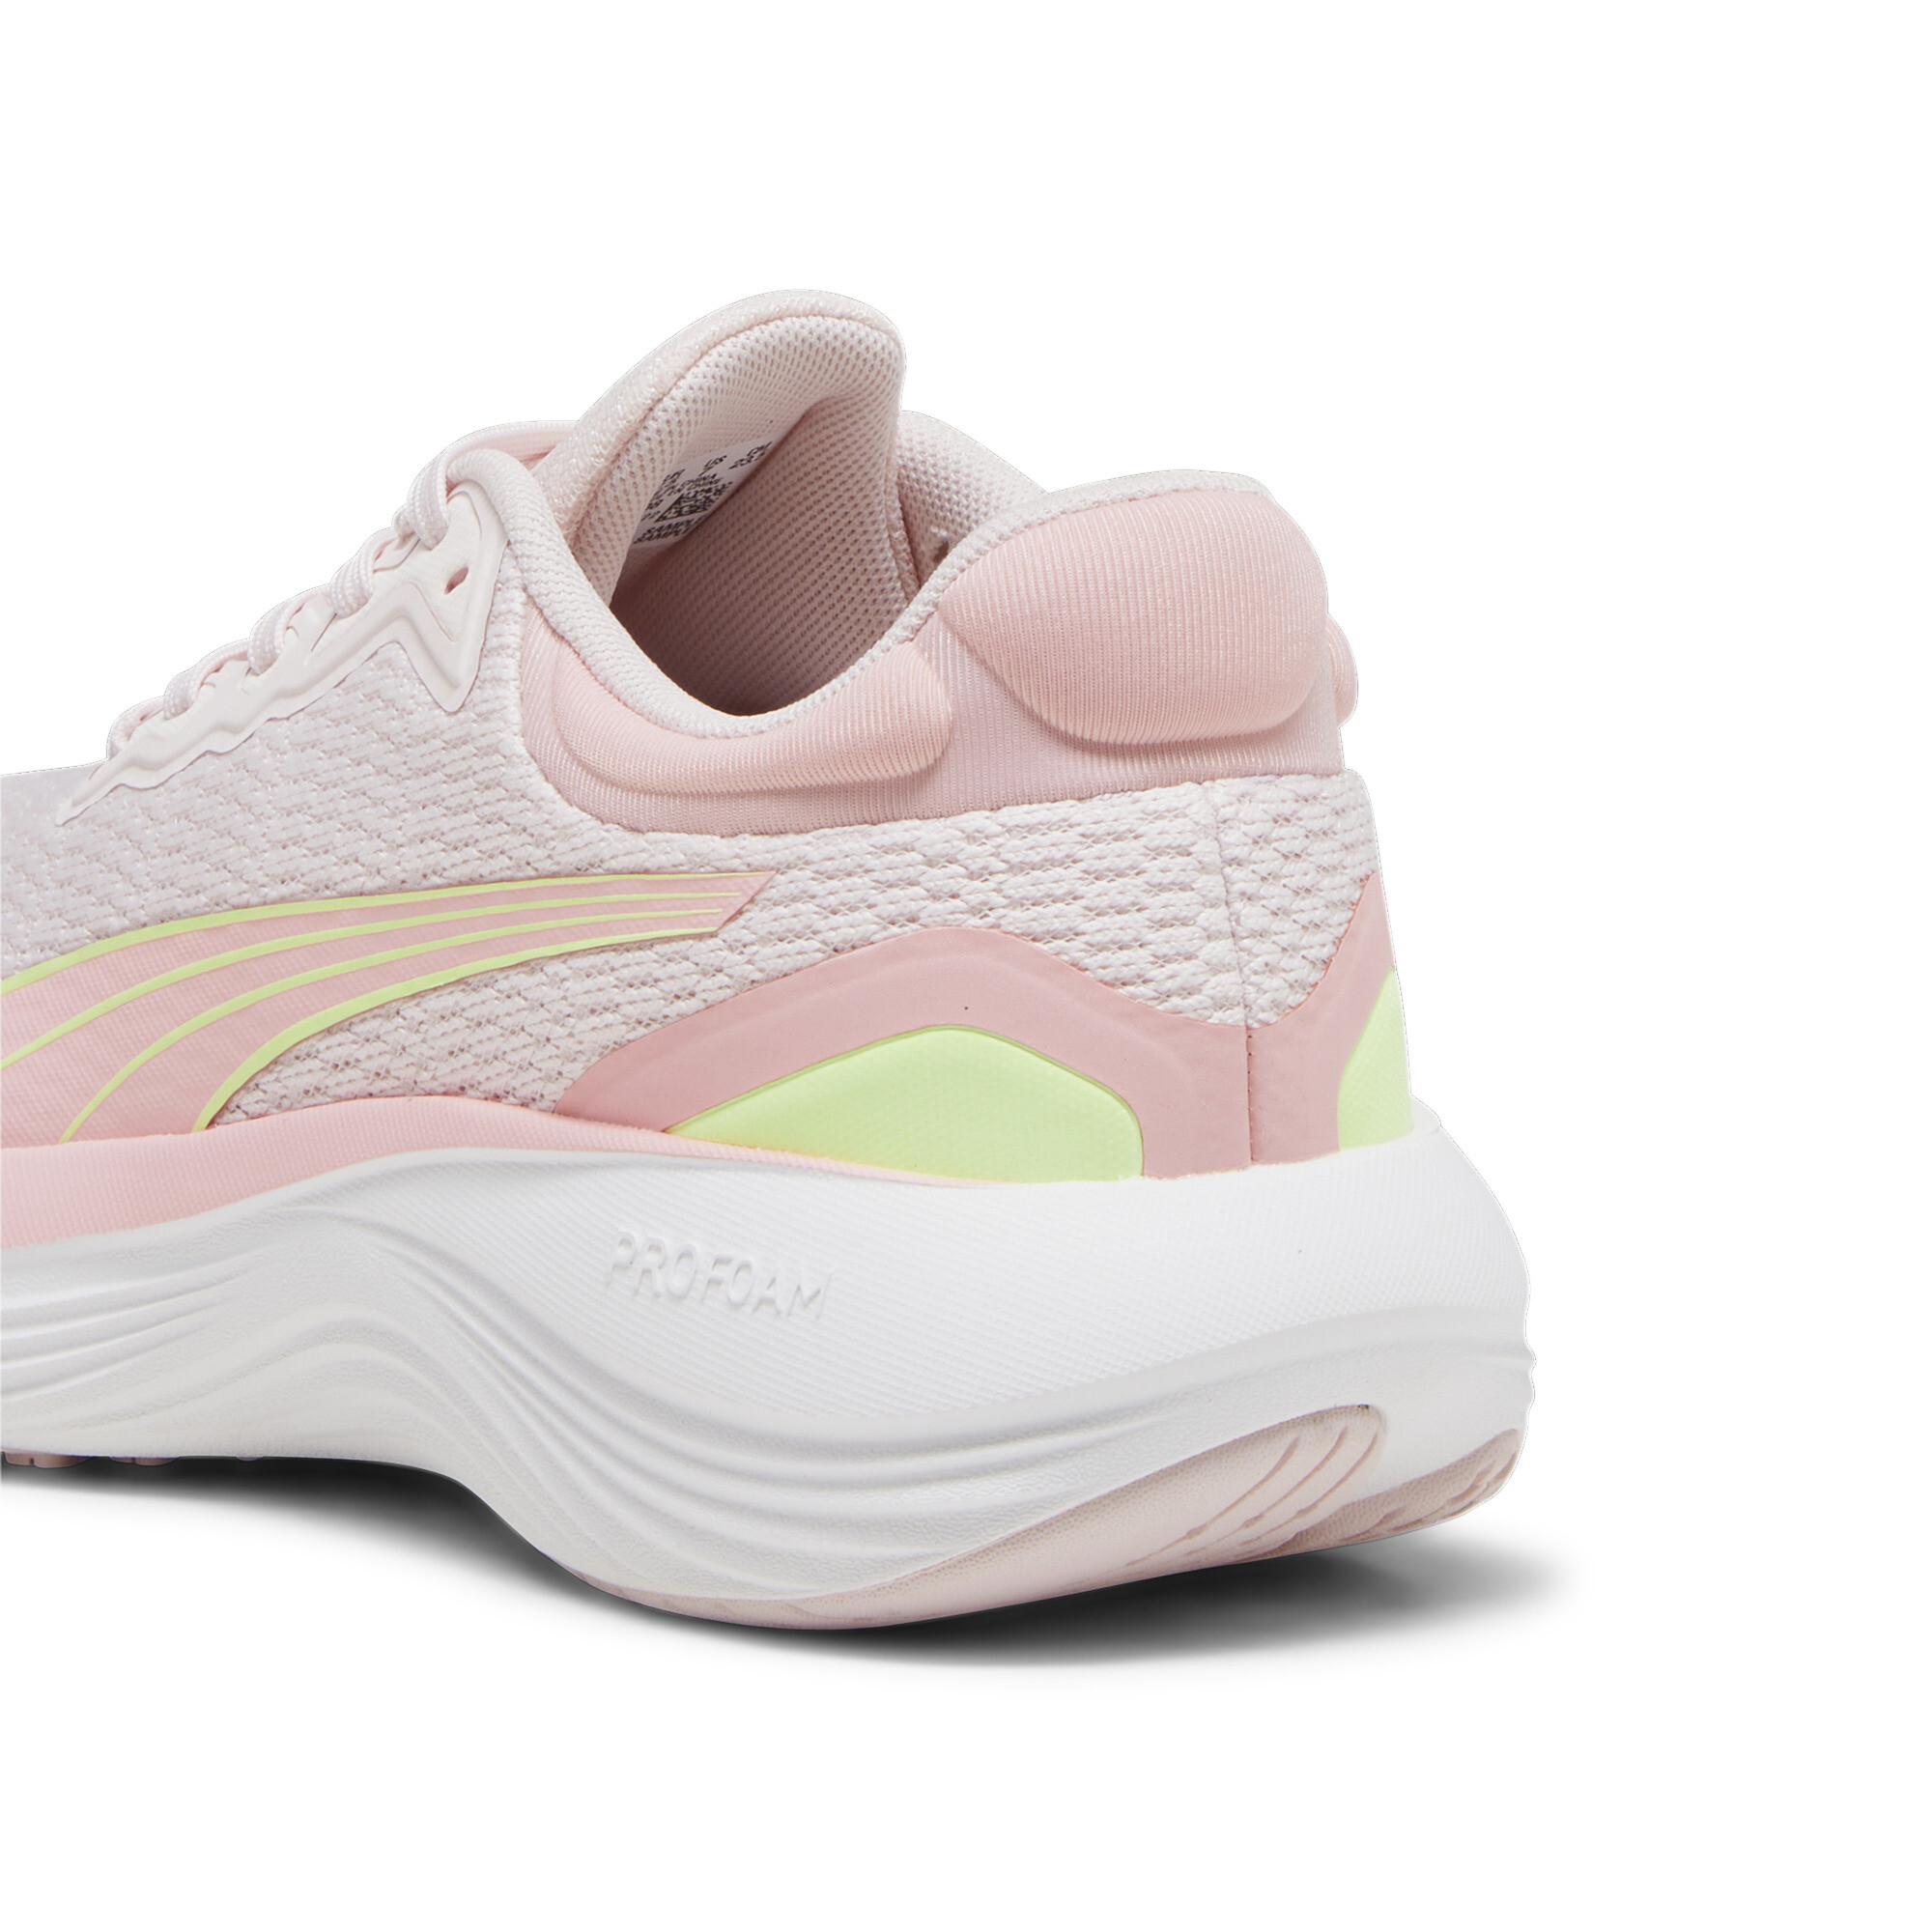 Men's PUMA Scend Pro Running Shoes In Pink, Size EU 39